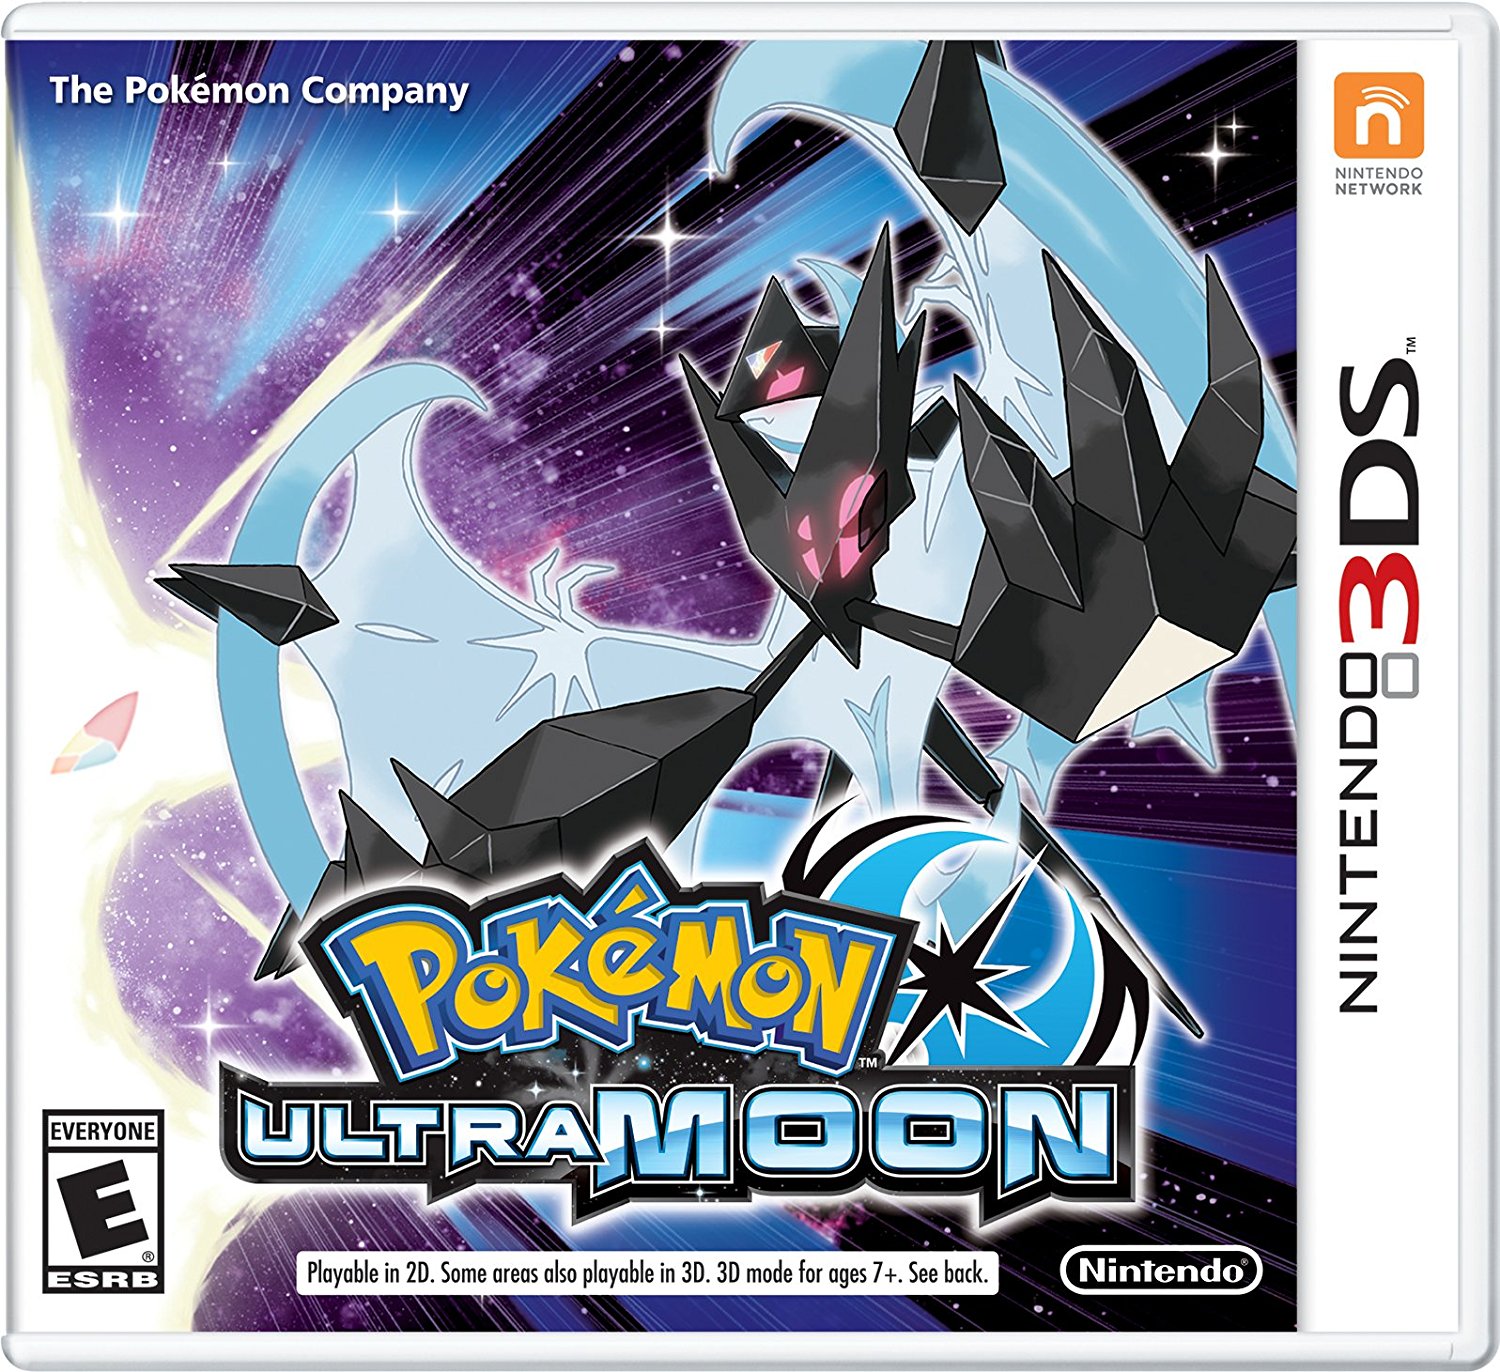 Universe Brony ™: Pokemon Ultra Sun and Moon - Download Cia